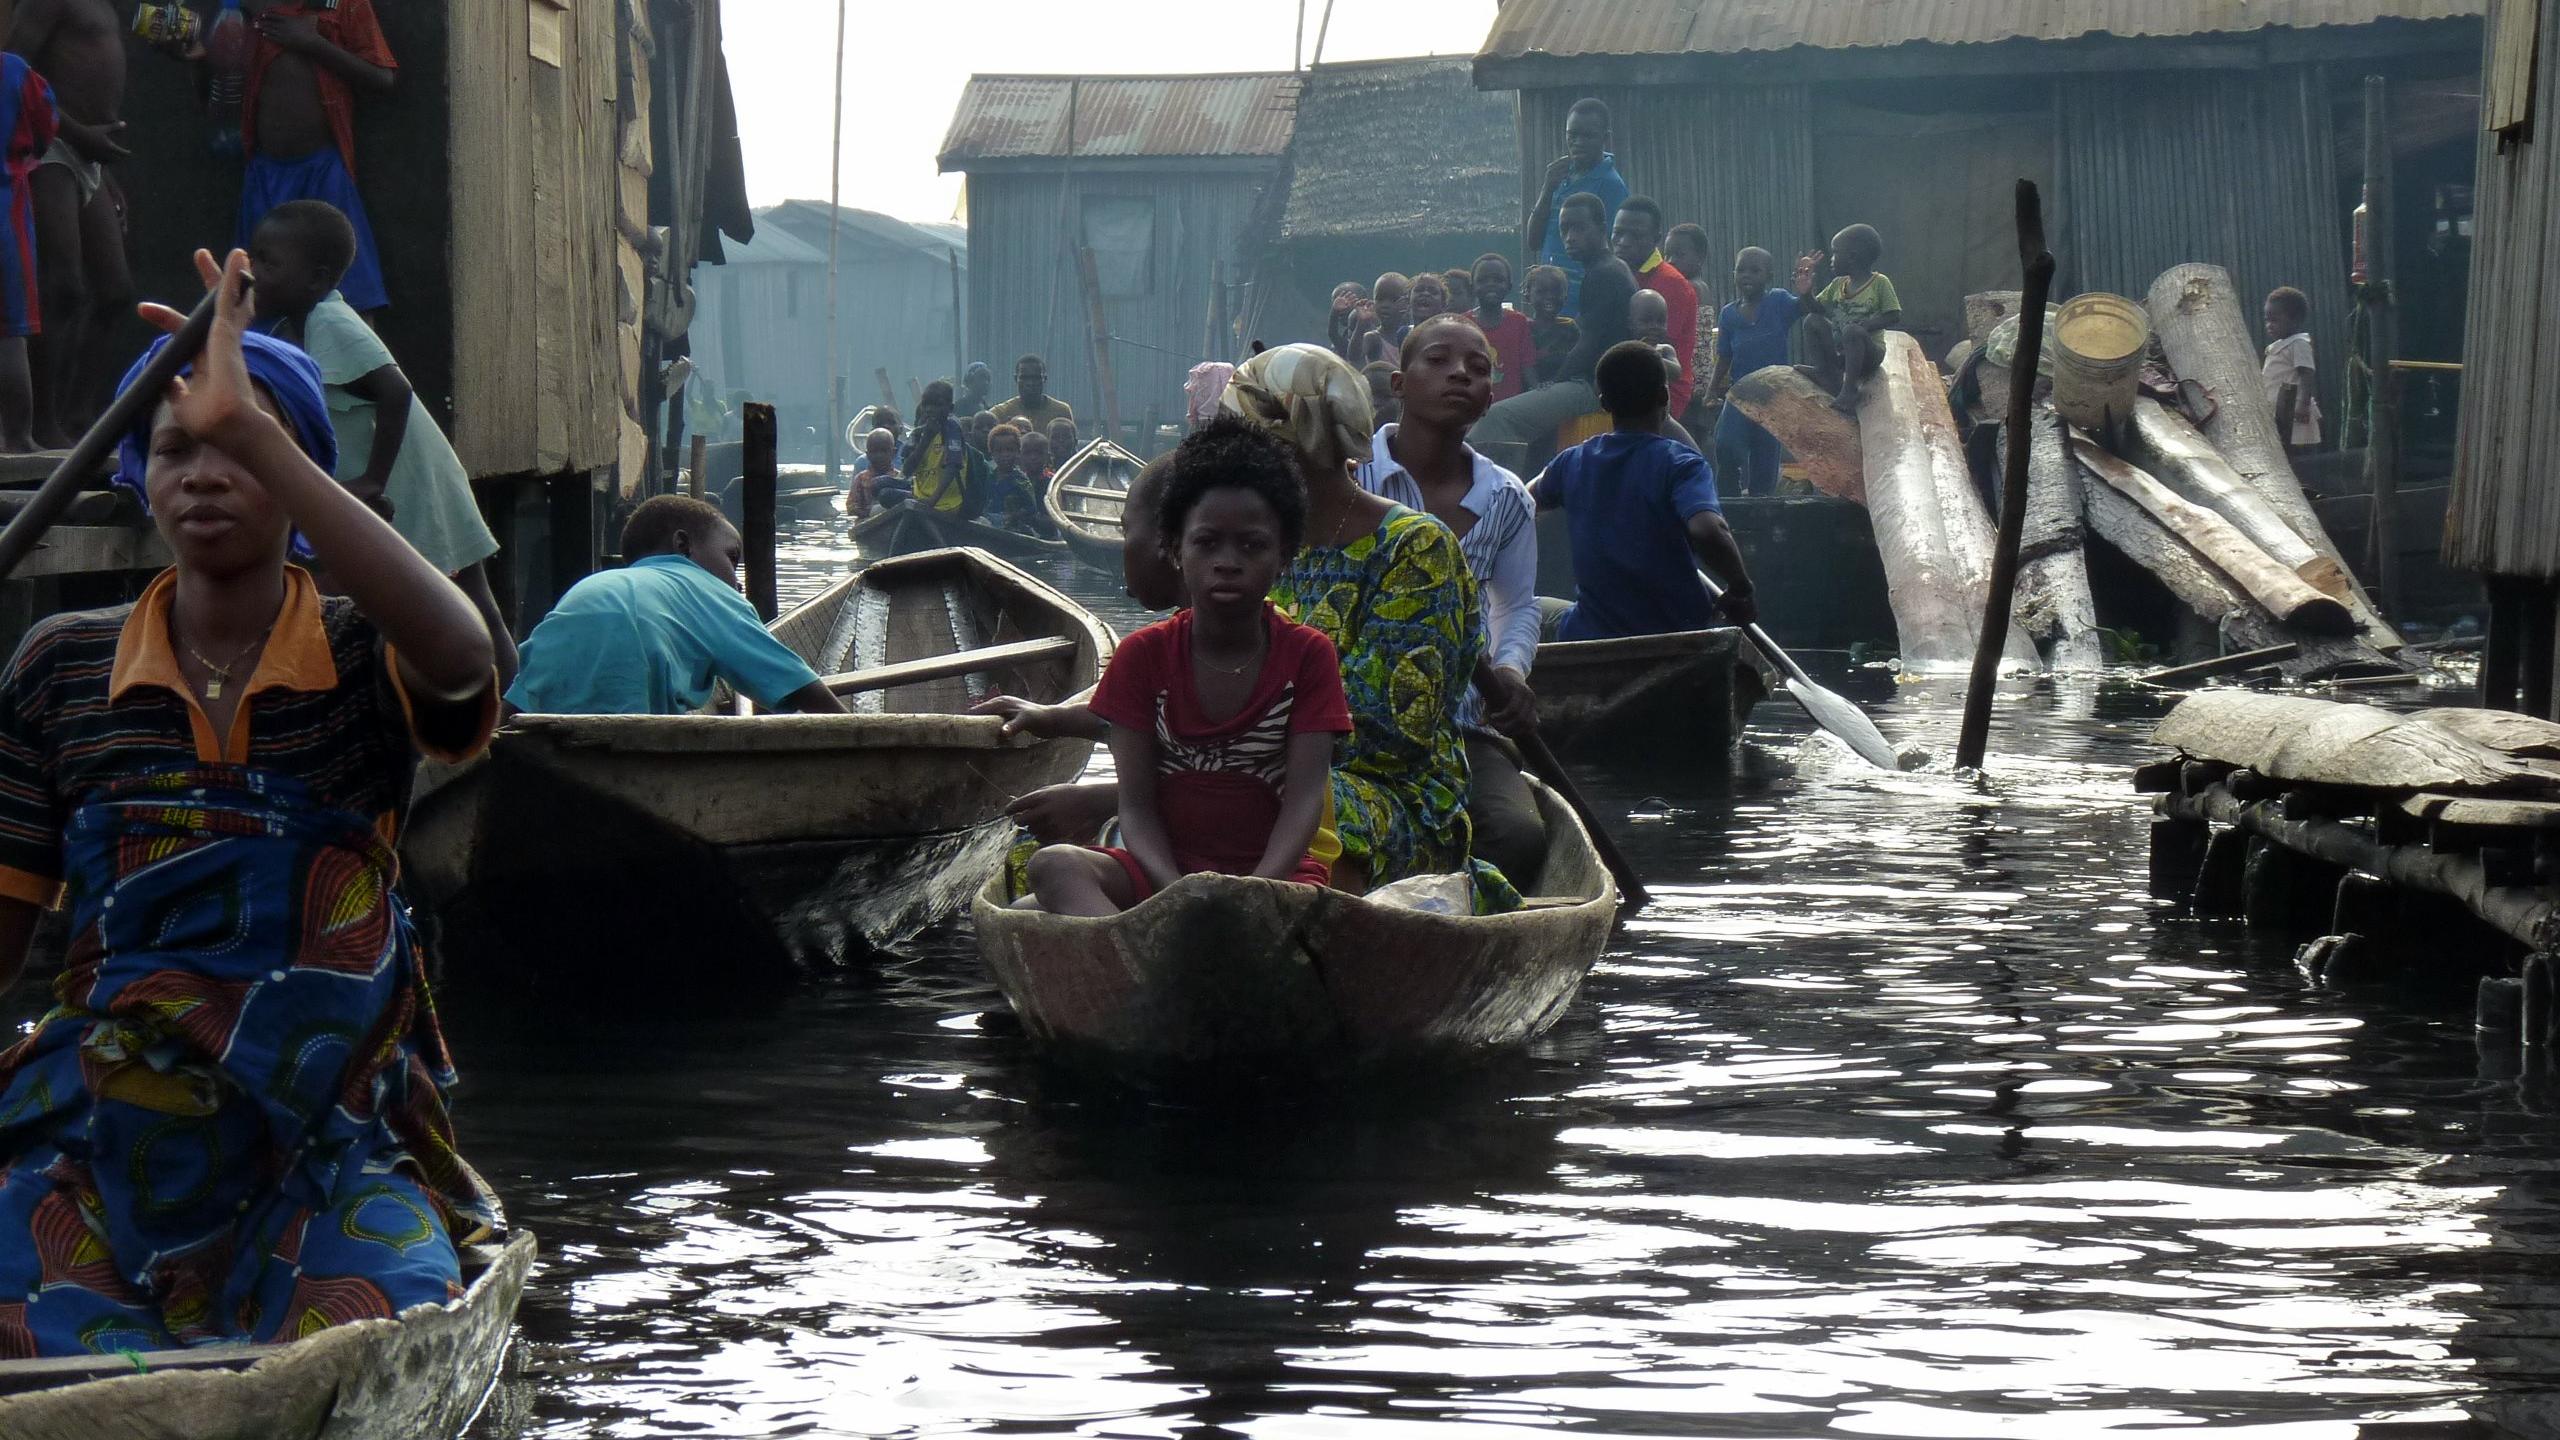 Boats Makoko, Lagos and flooding in Nigeria, October 13, 2012 